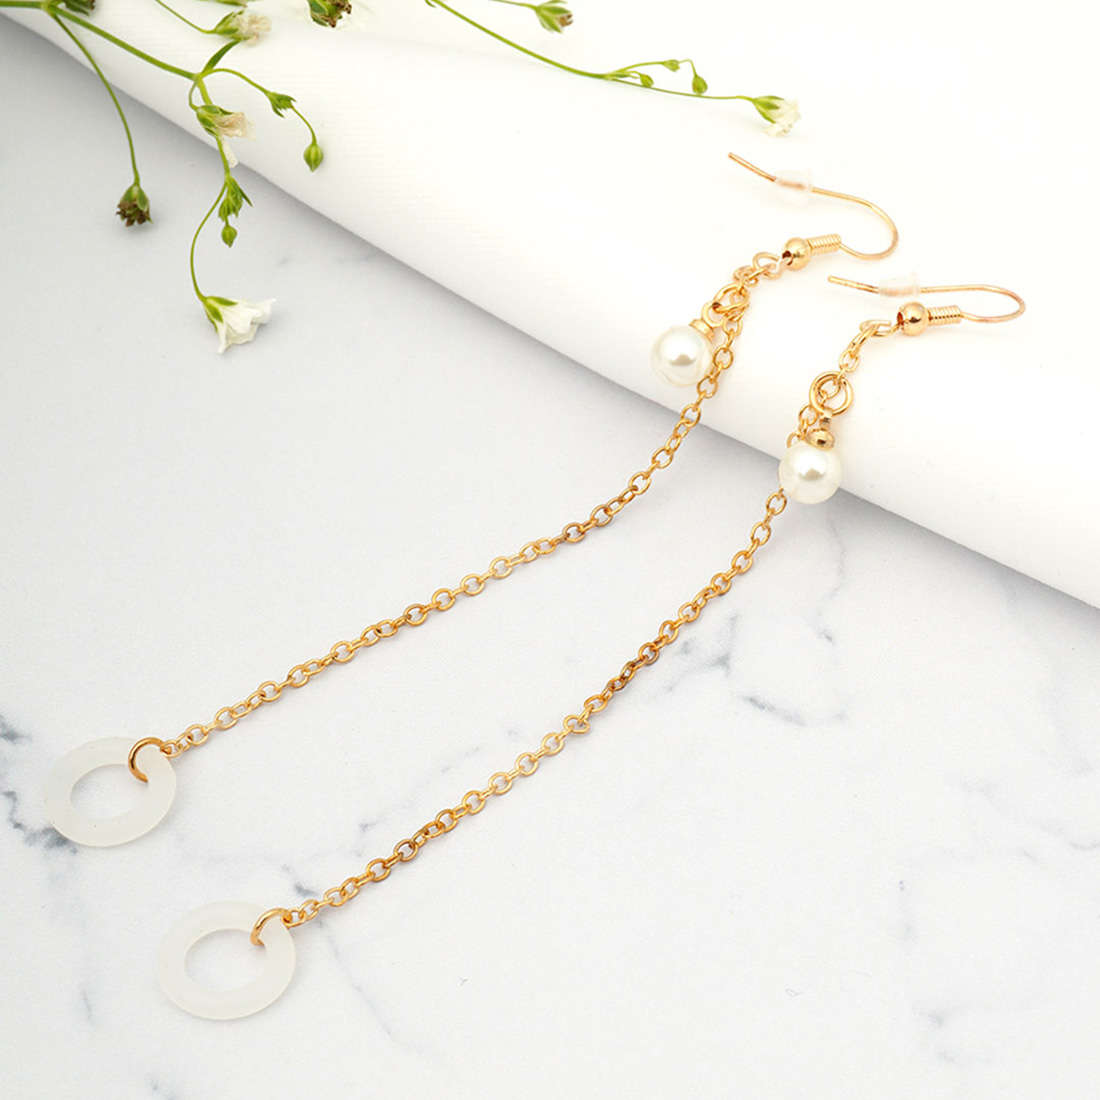 White Ring Gold Chain Earrings
